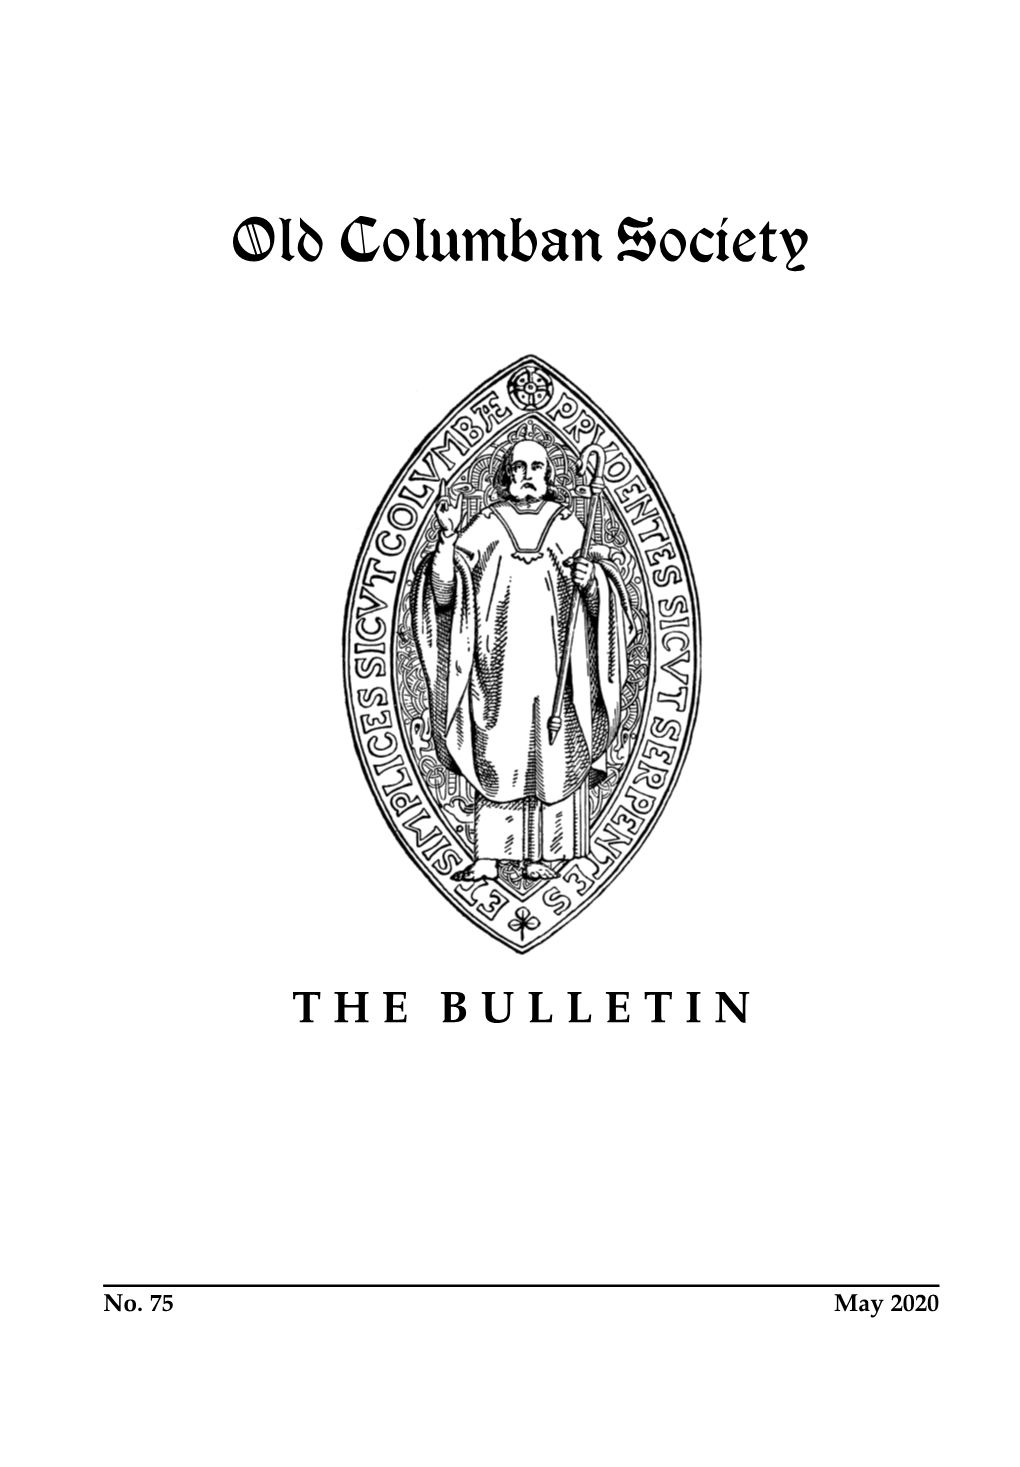 Old Columban Society Officers